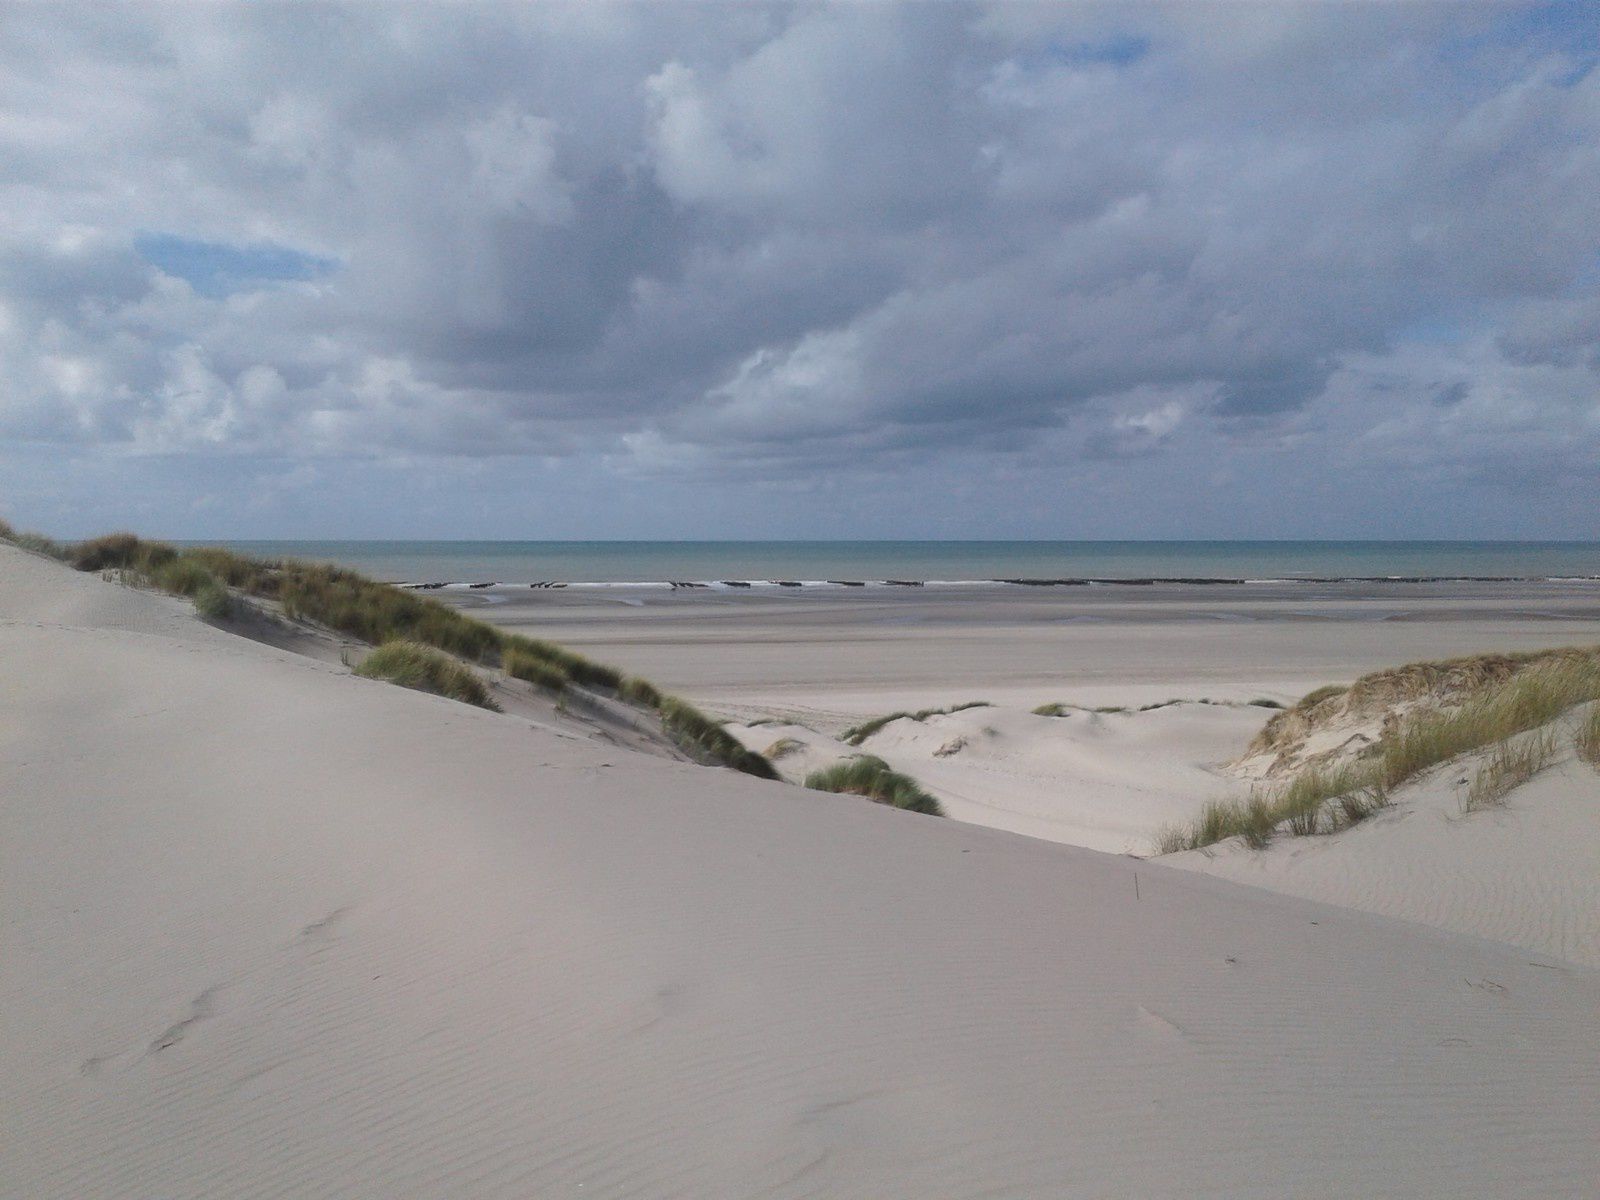 dunes 2